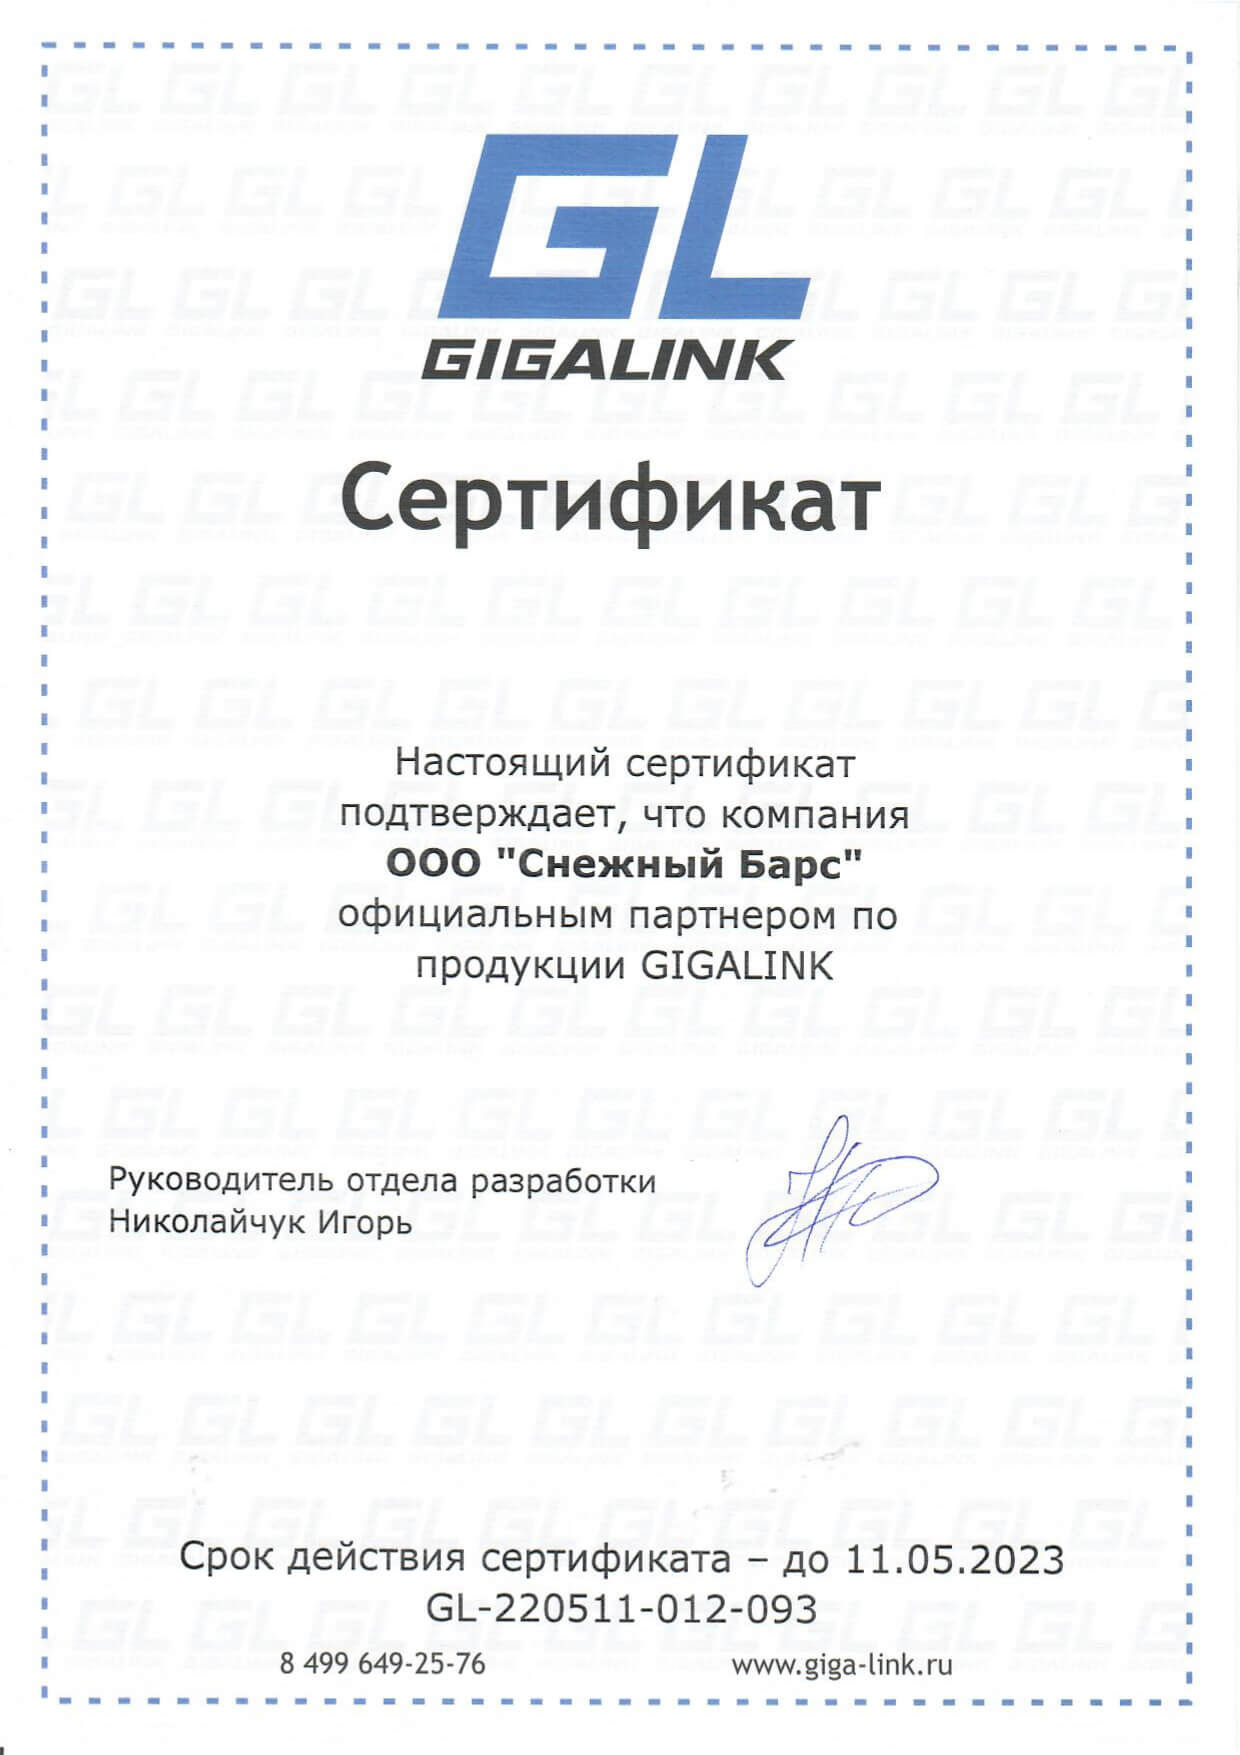 Сертификат Gigalink